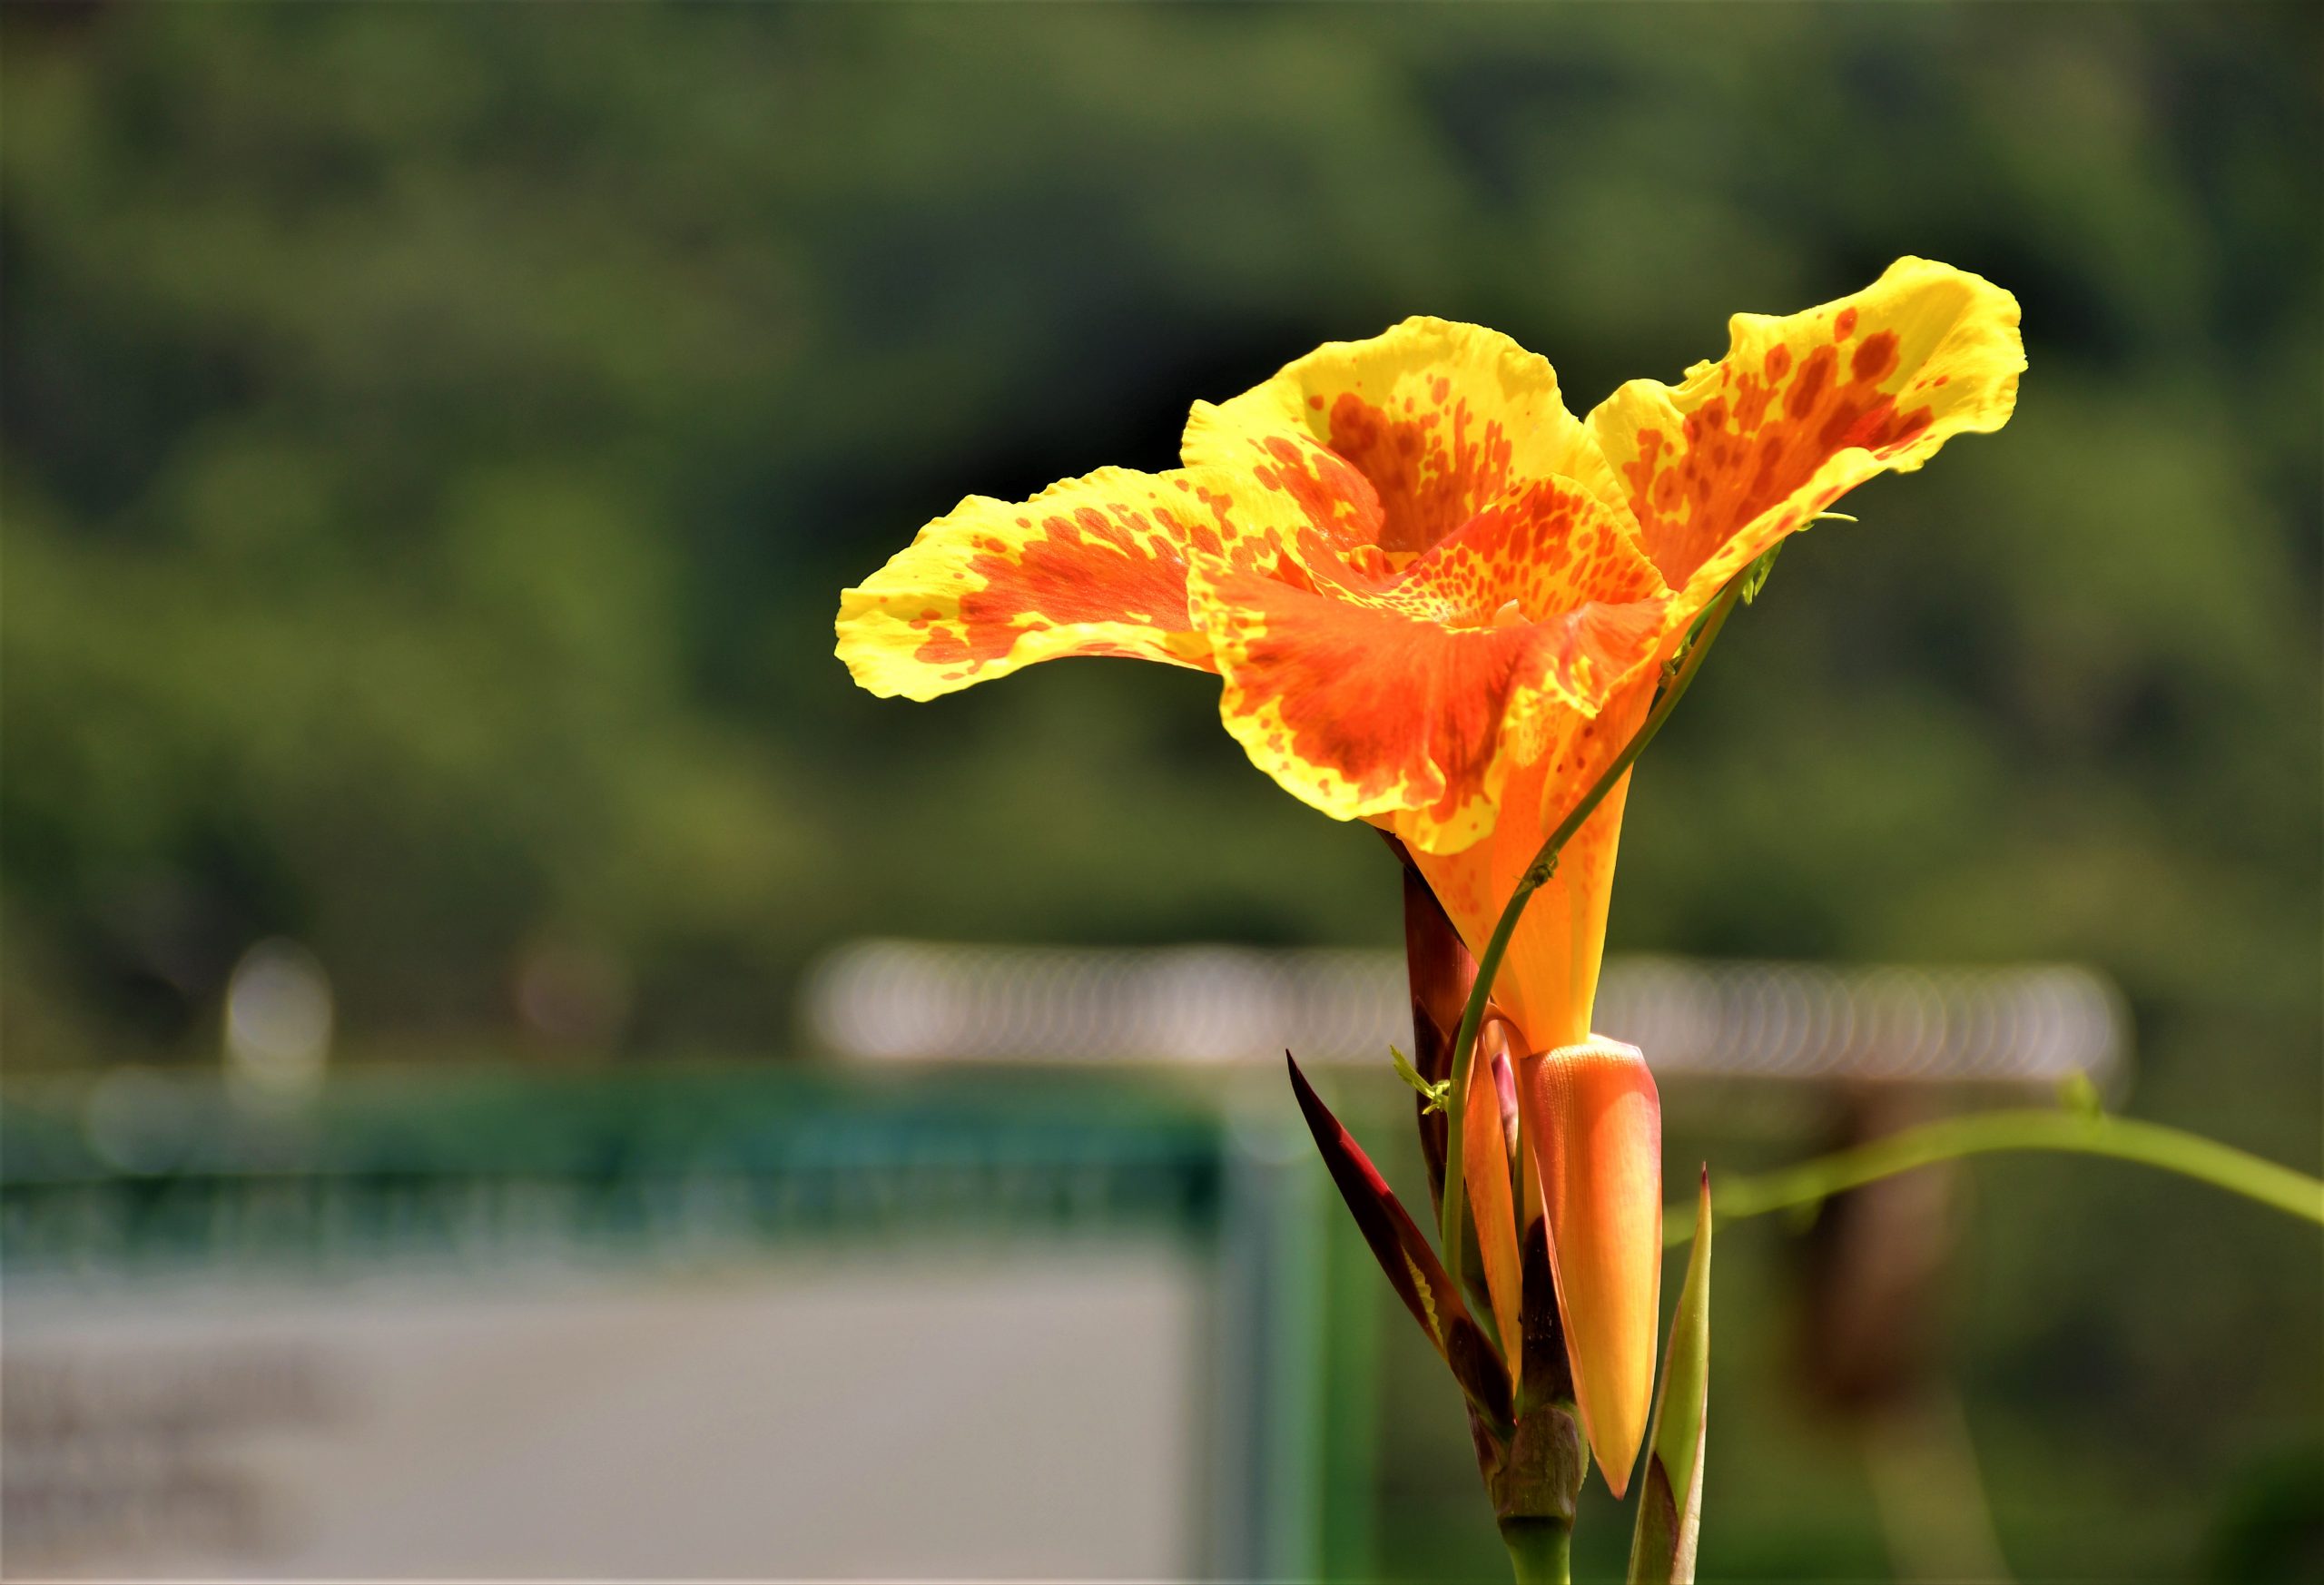 Yellow-Orange Canna Lily flower